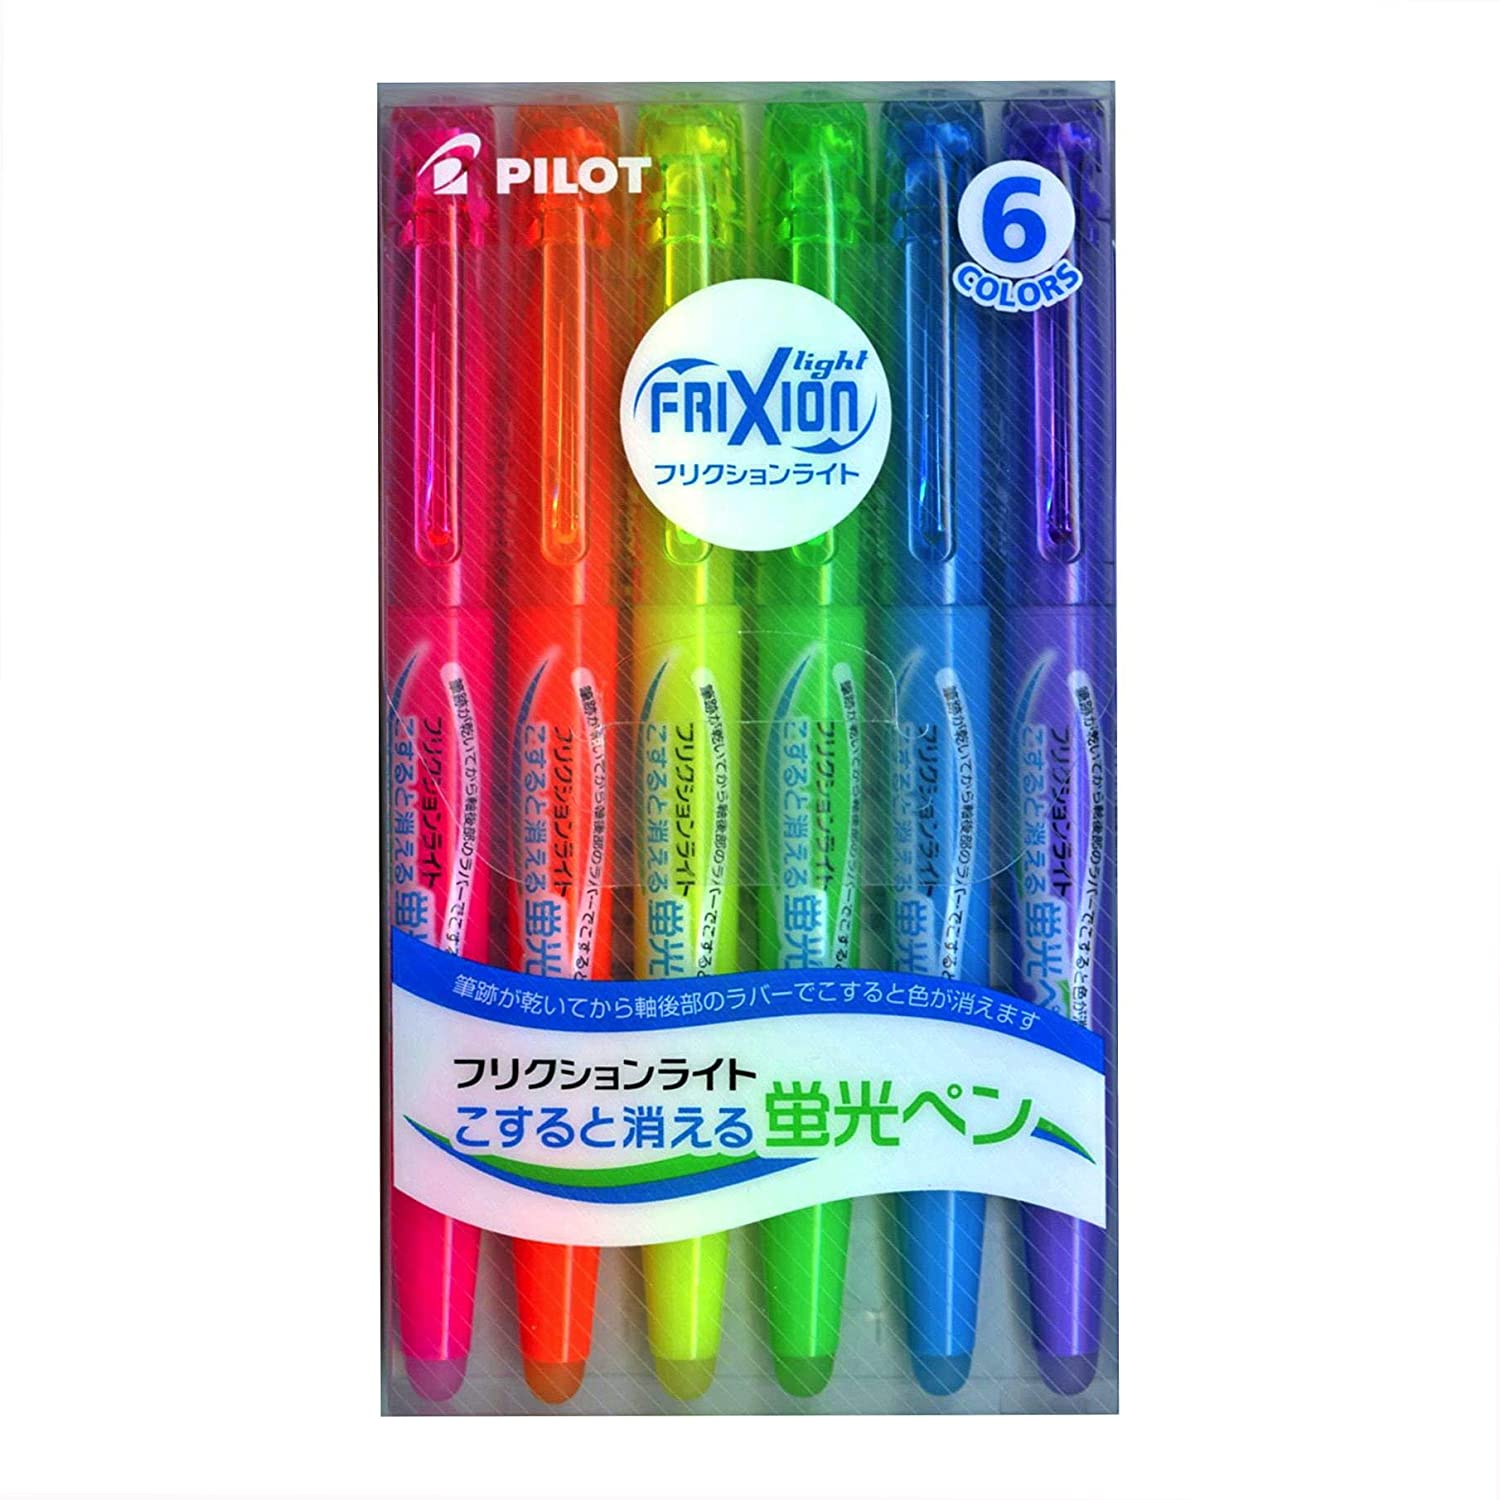 Pilot FriXion Light Soft Color Erasable Highlighter - 6 Color Set